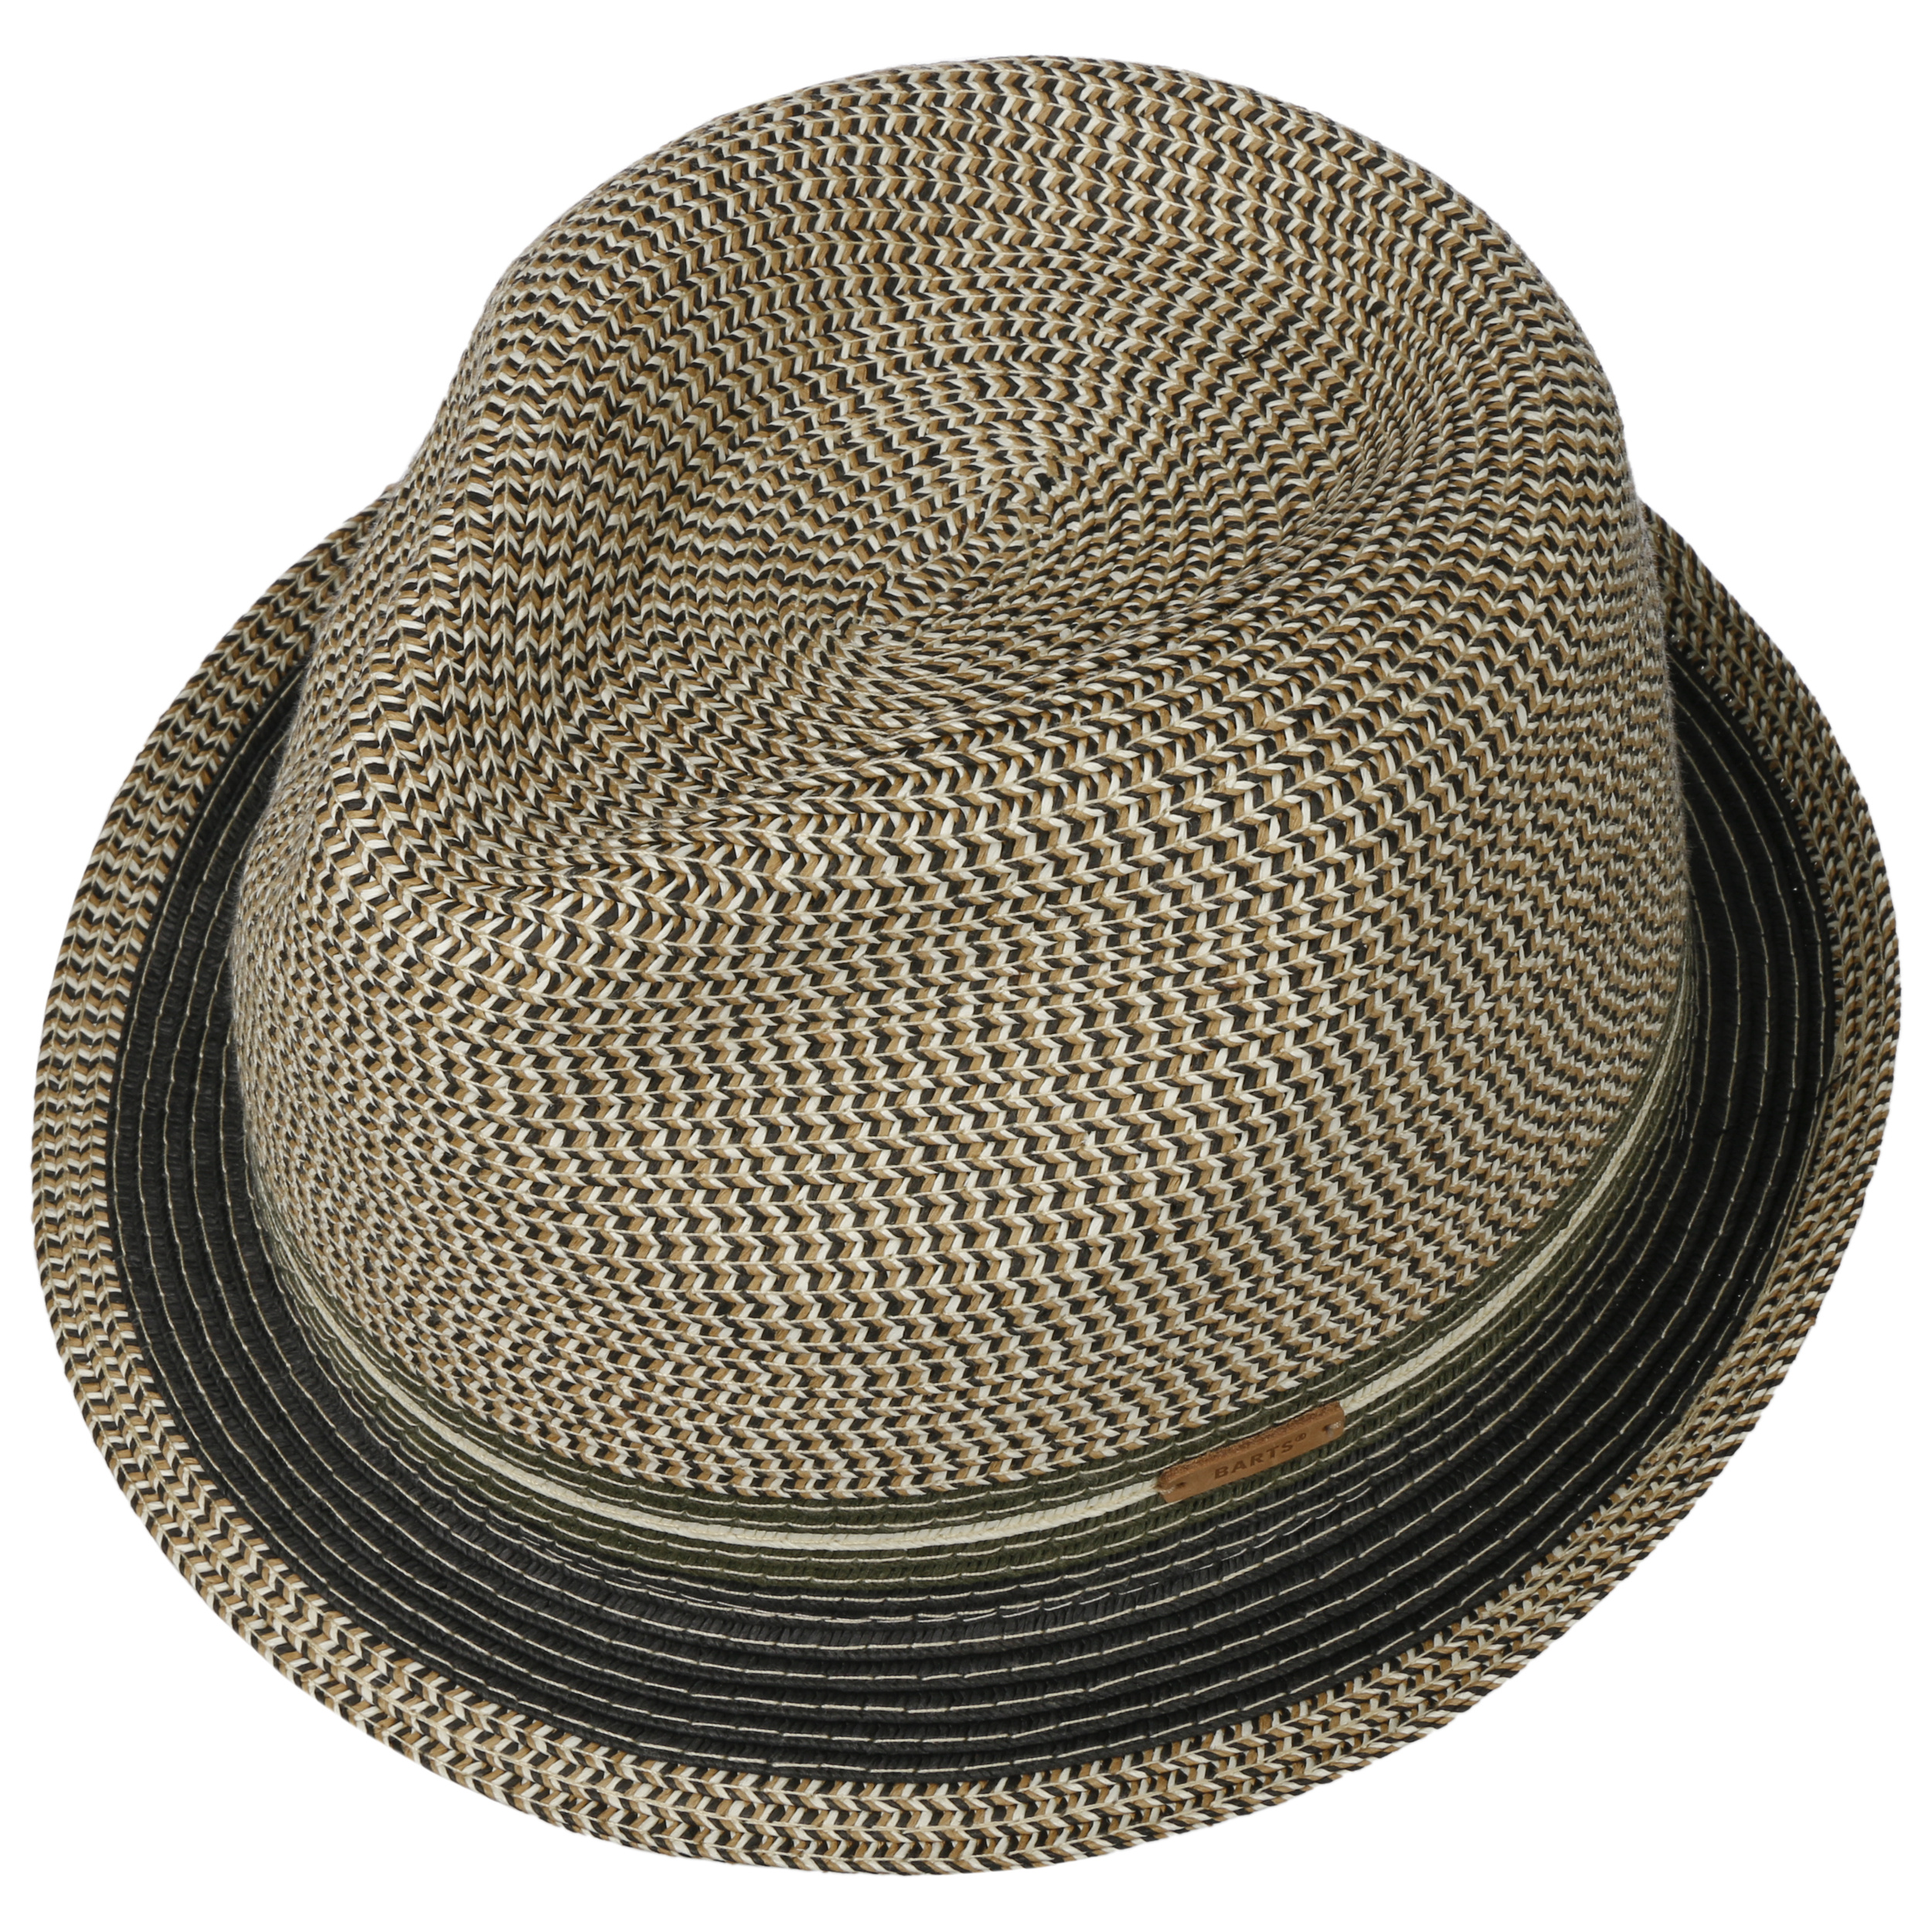 Fluoriet Trilby Hat by Barts - 32,90 £